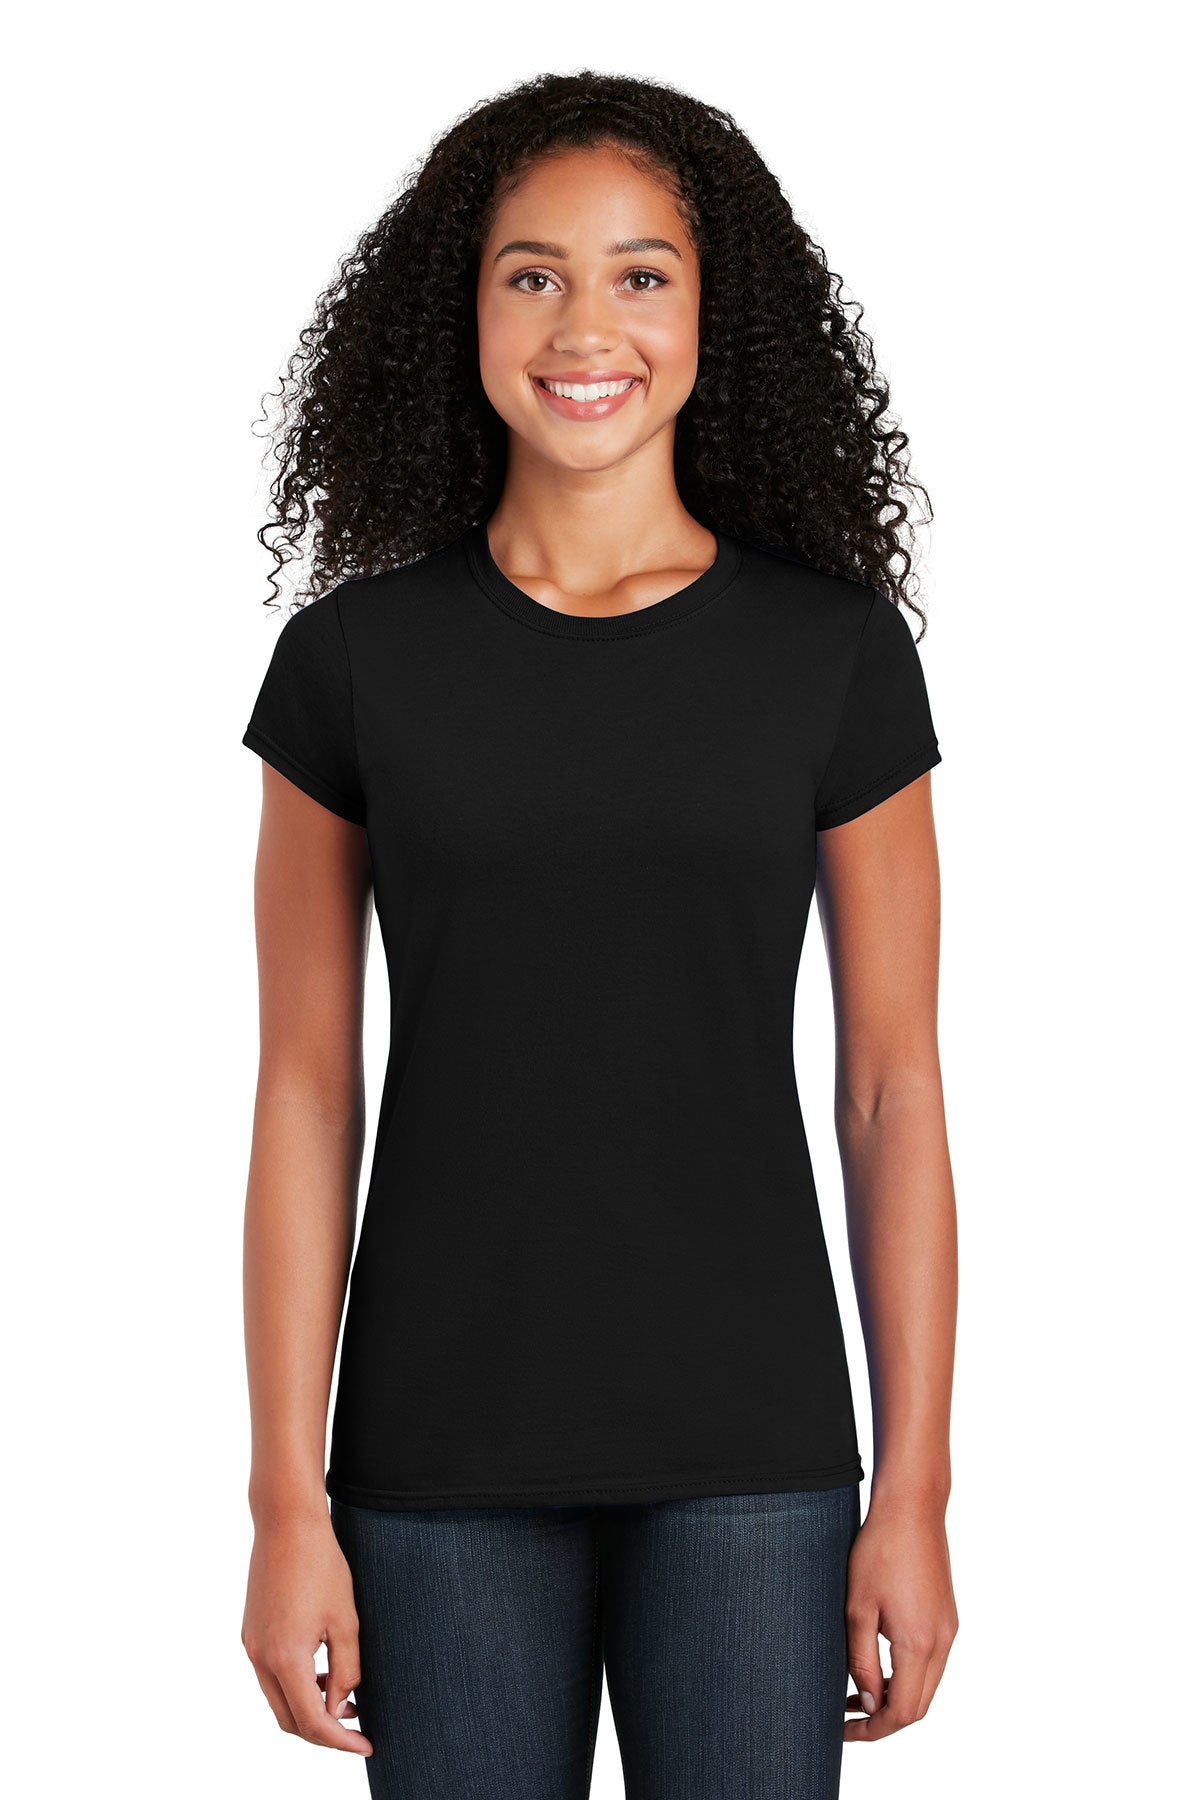 La Bestia Black cotton Tshirt - Ladies